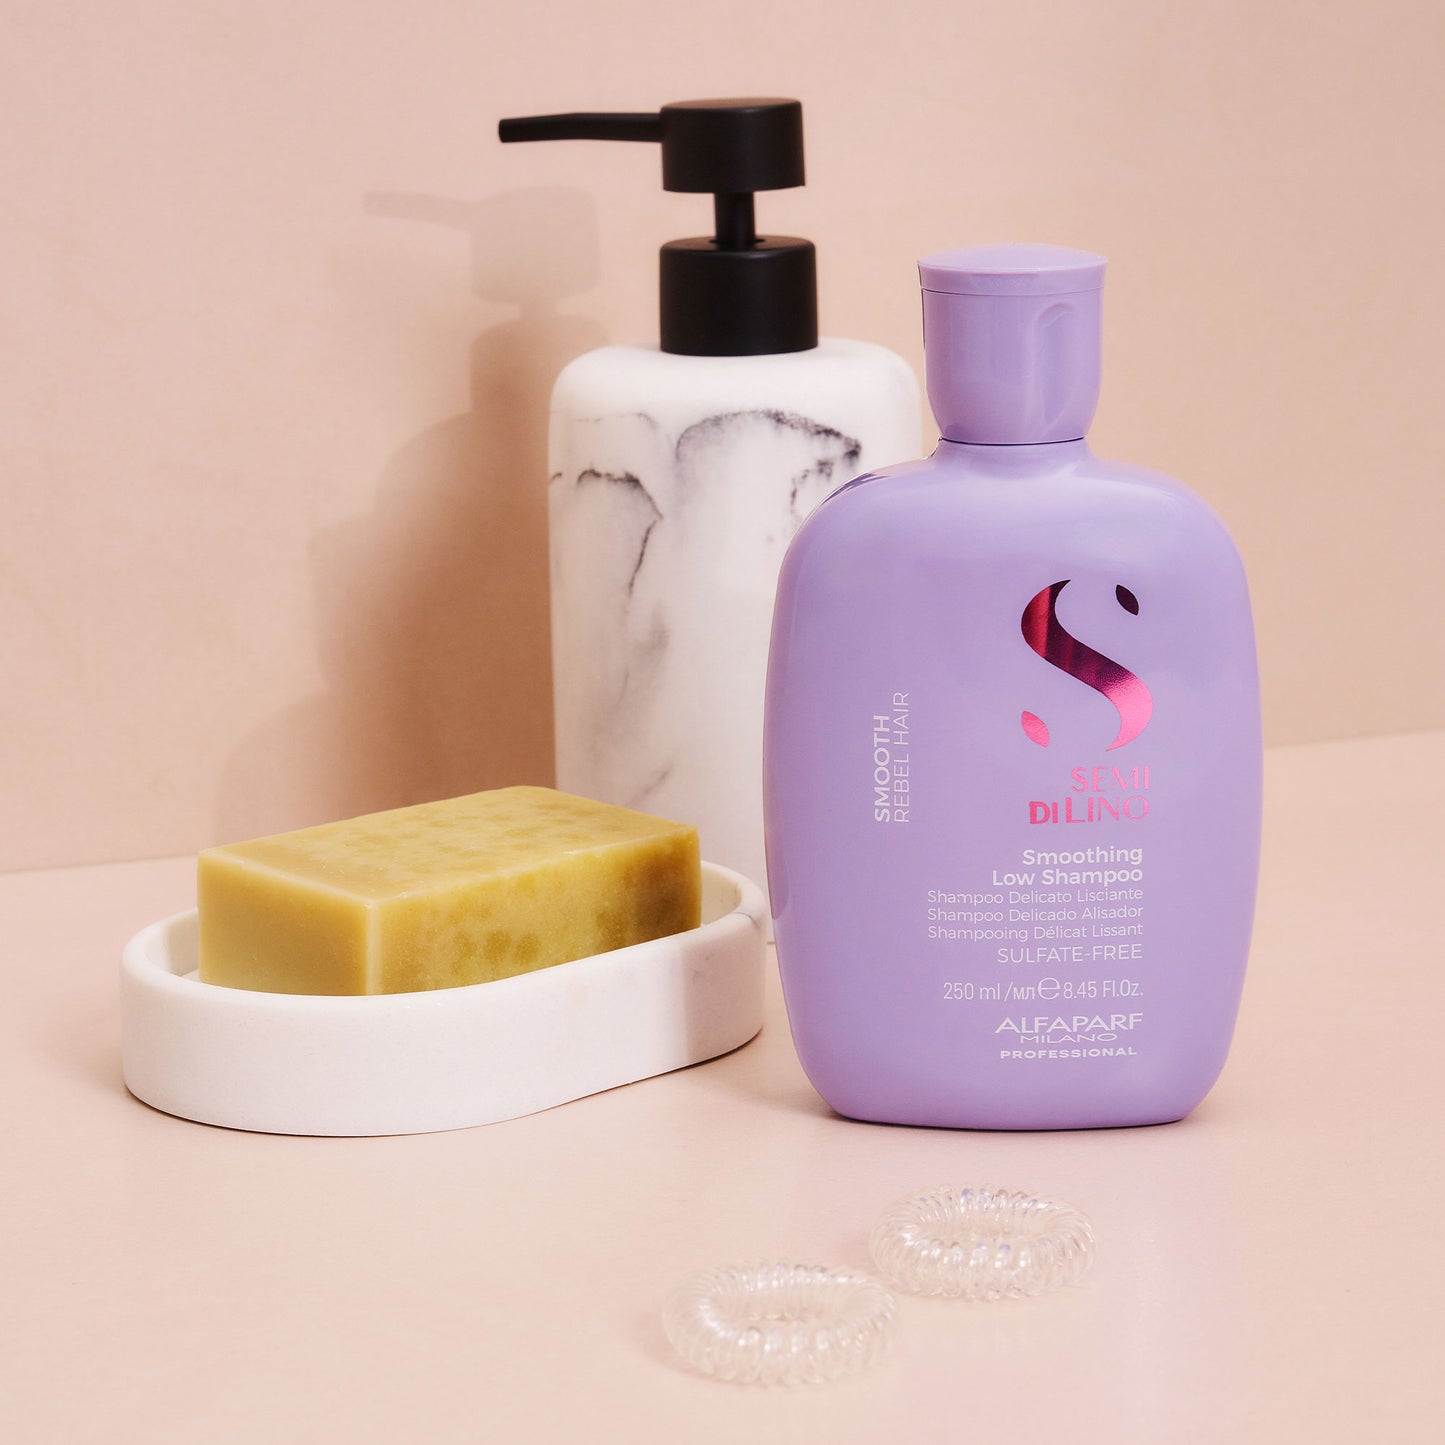 Semi di Lino / Smoothing Low Shampoo